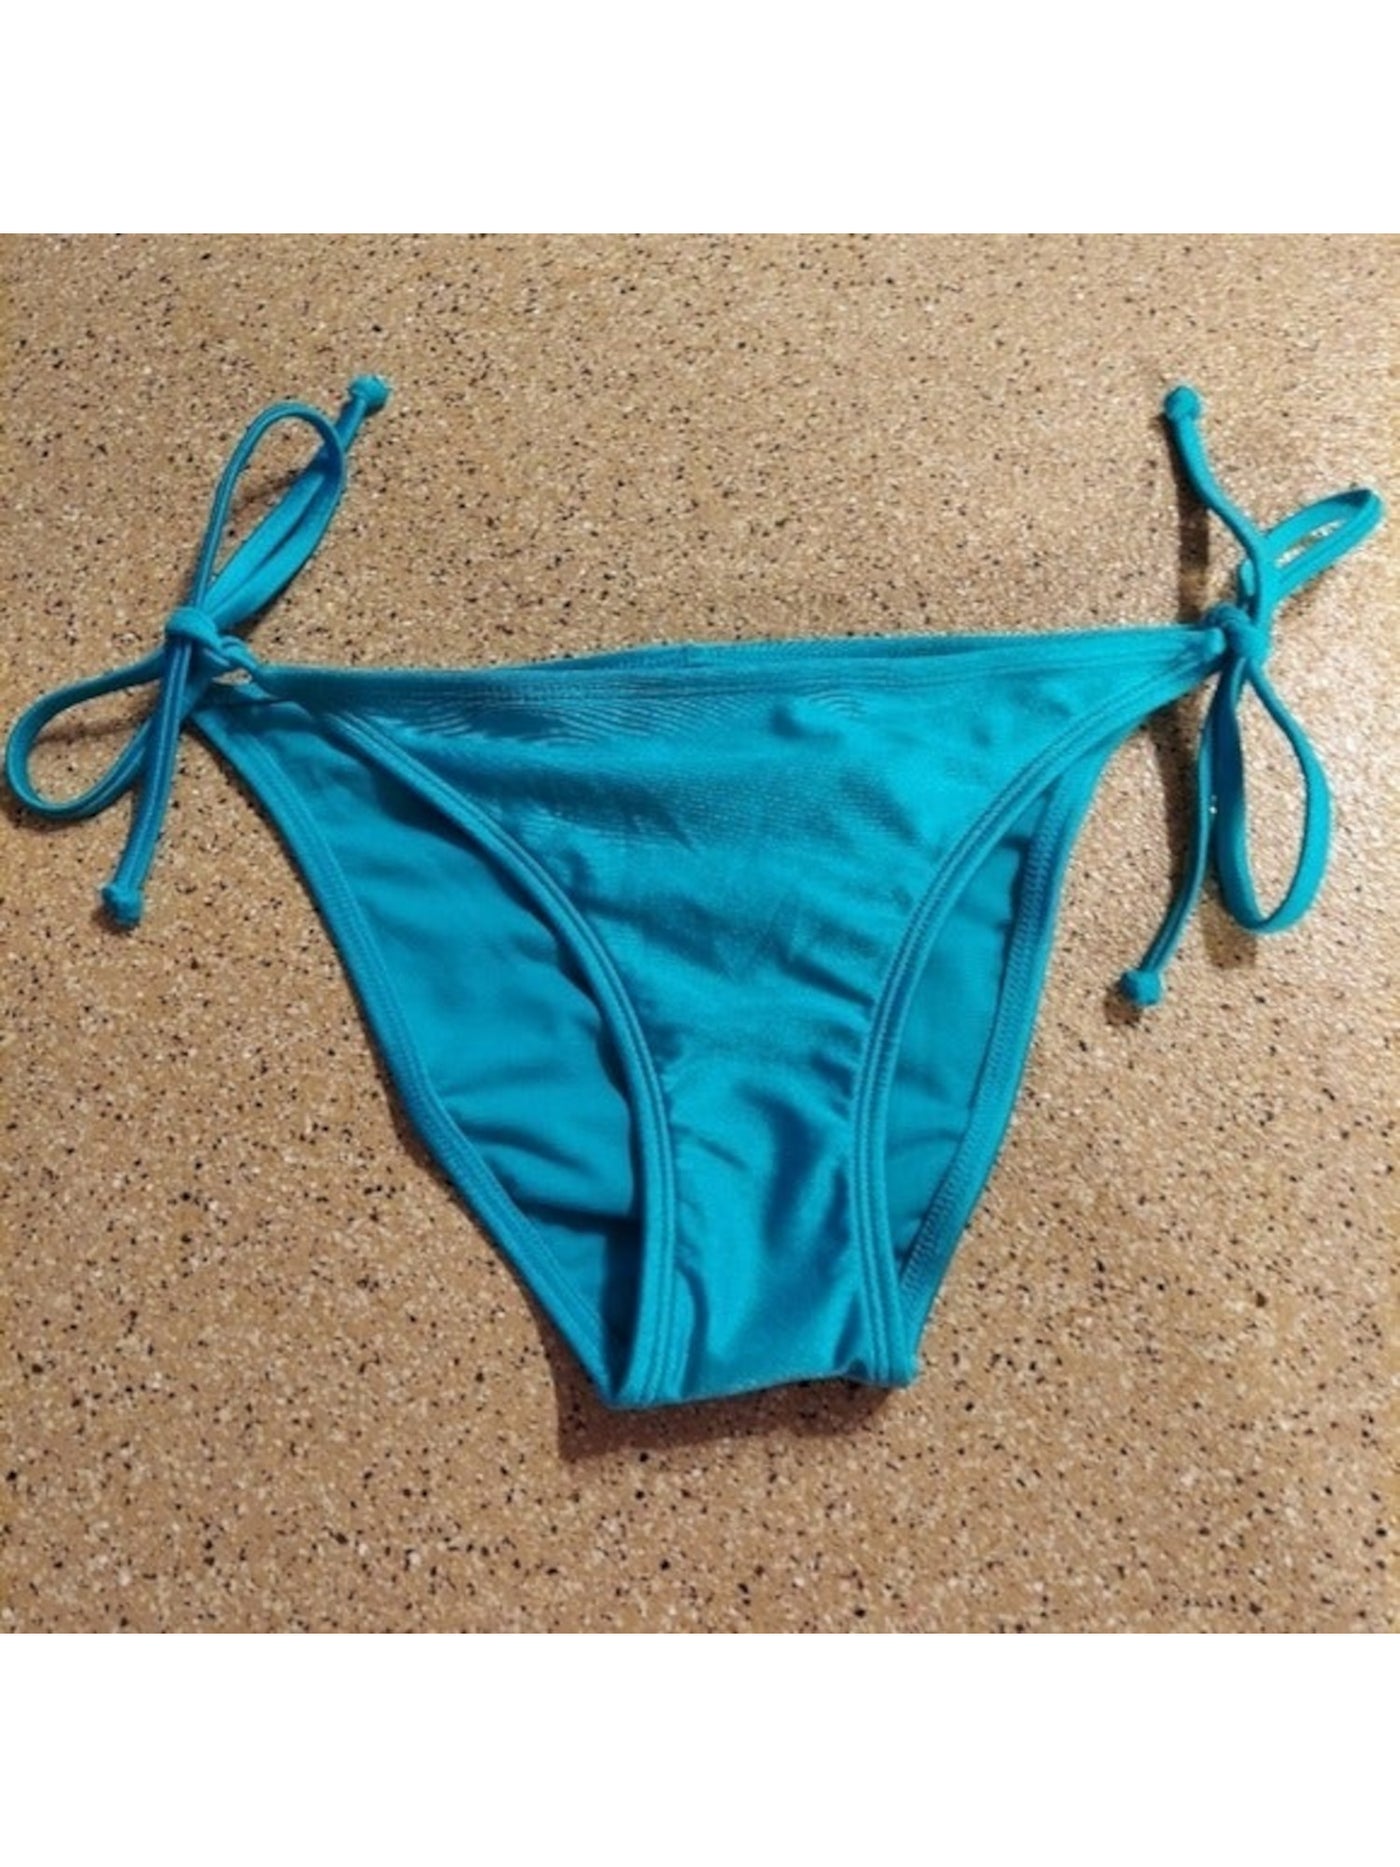 XHILARATION Women's Blue Tie Bikini Swimsuit Bottom S